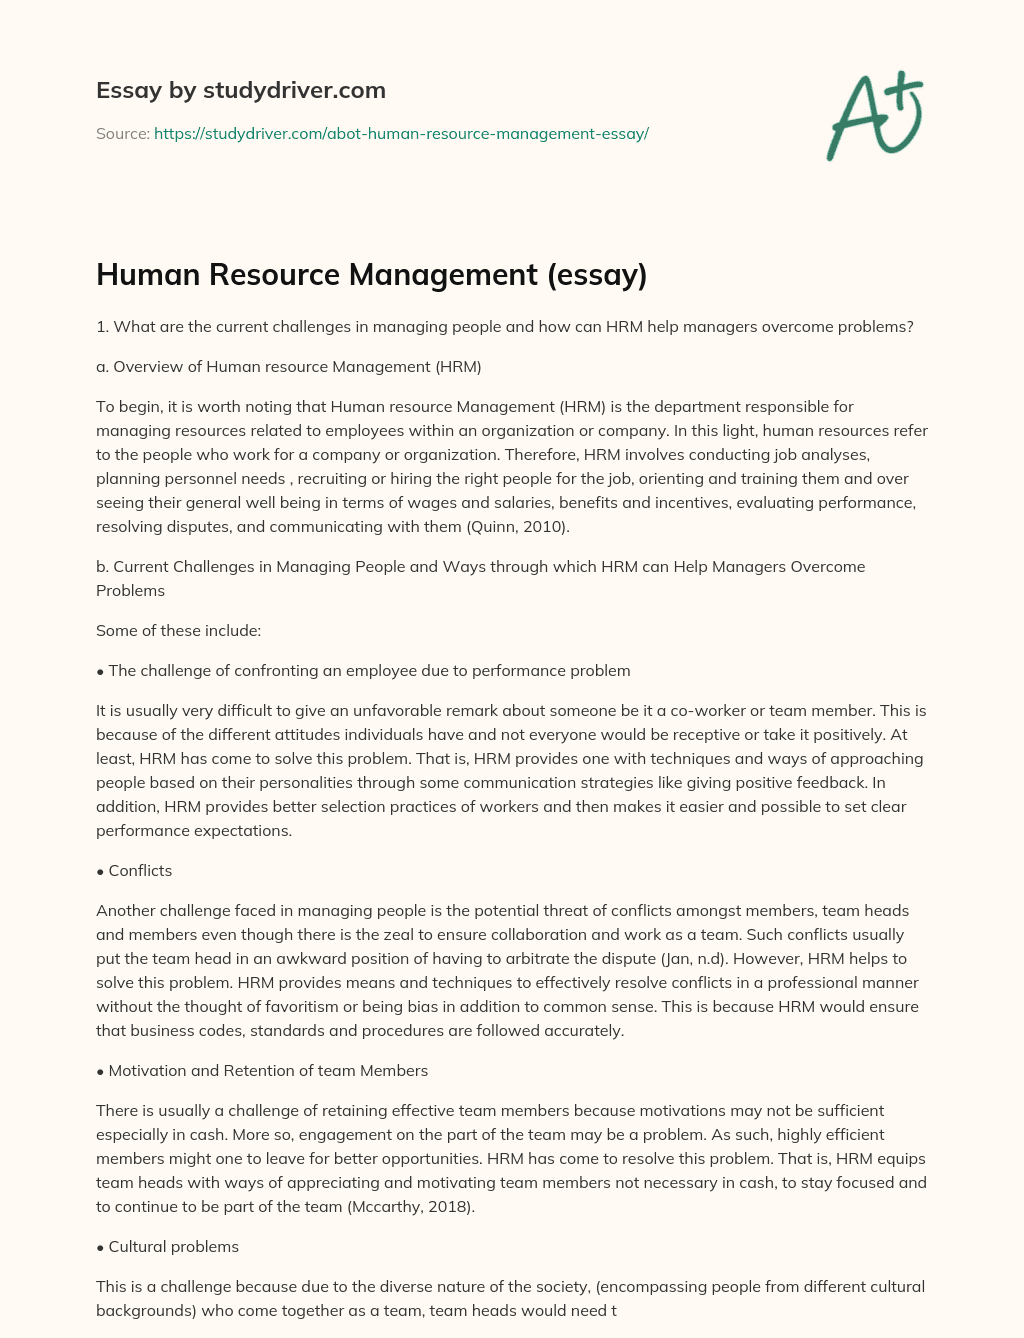 Human Resource Management (essay) essay